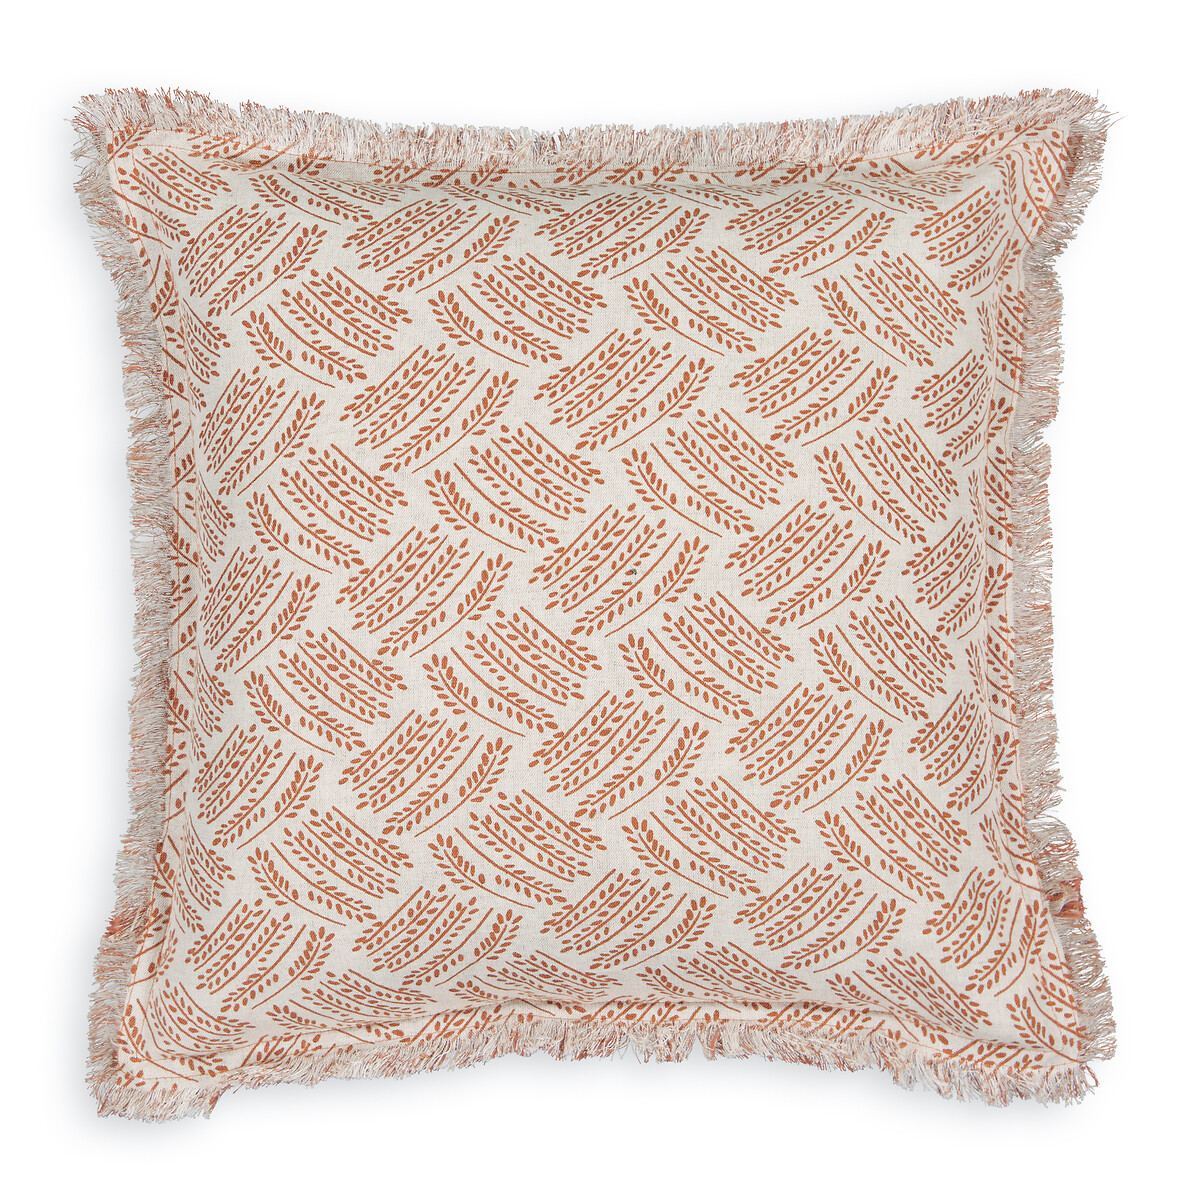 Orella Natural Print Cotton Linen Blend 40 x 40cm Cushion Cover